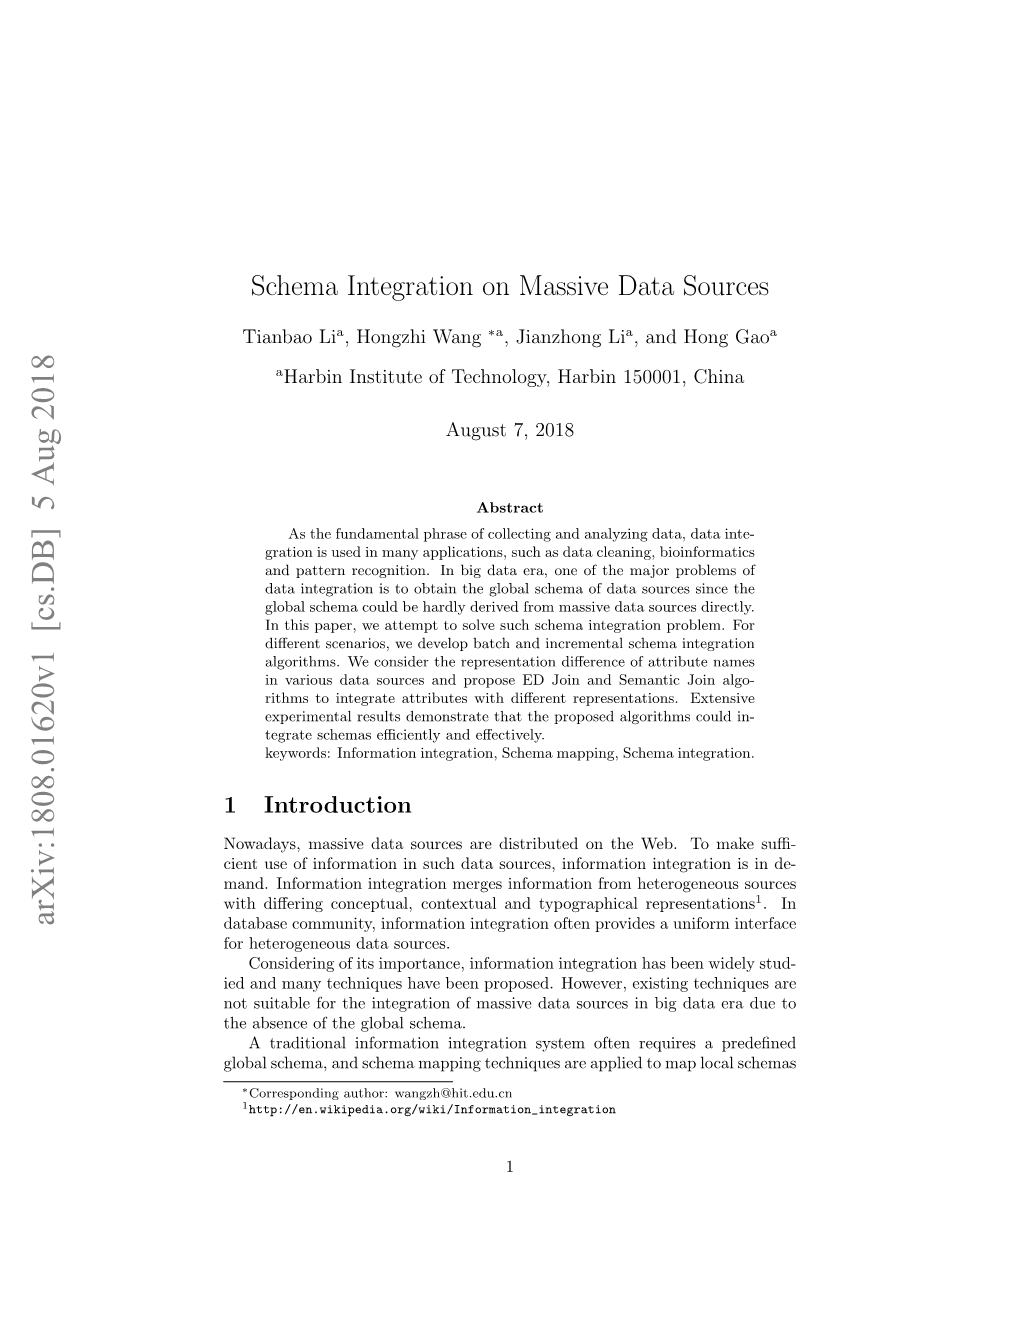 Schema Integration on Massive Data Sources